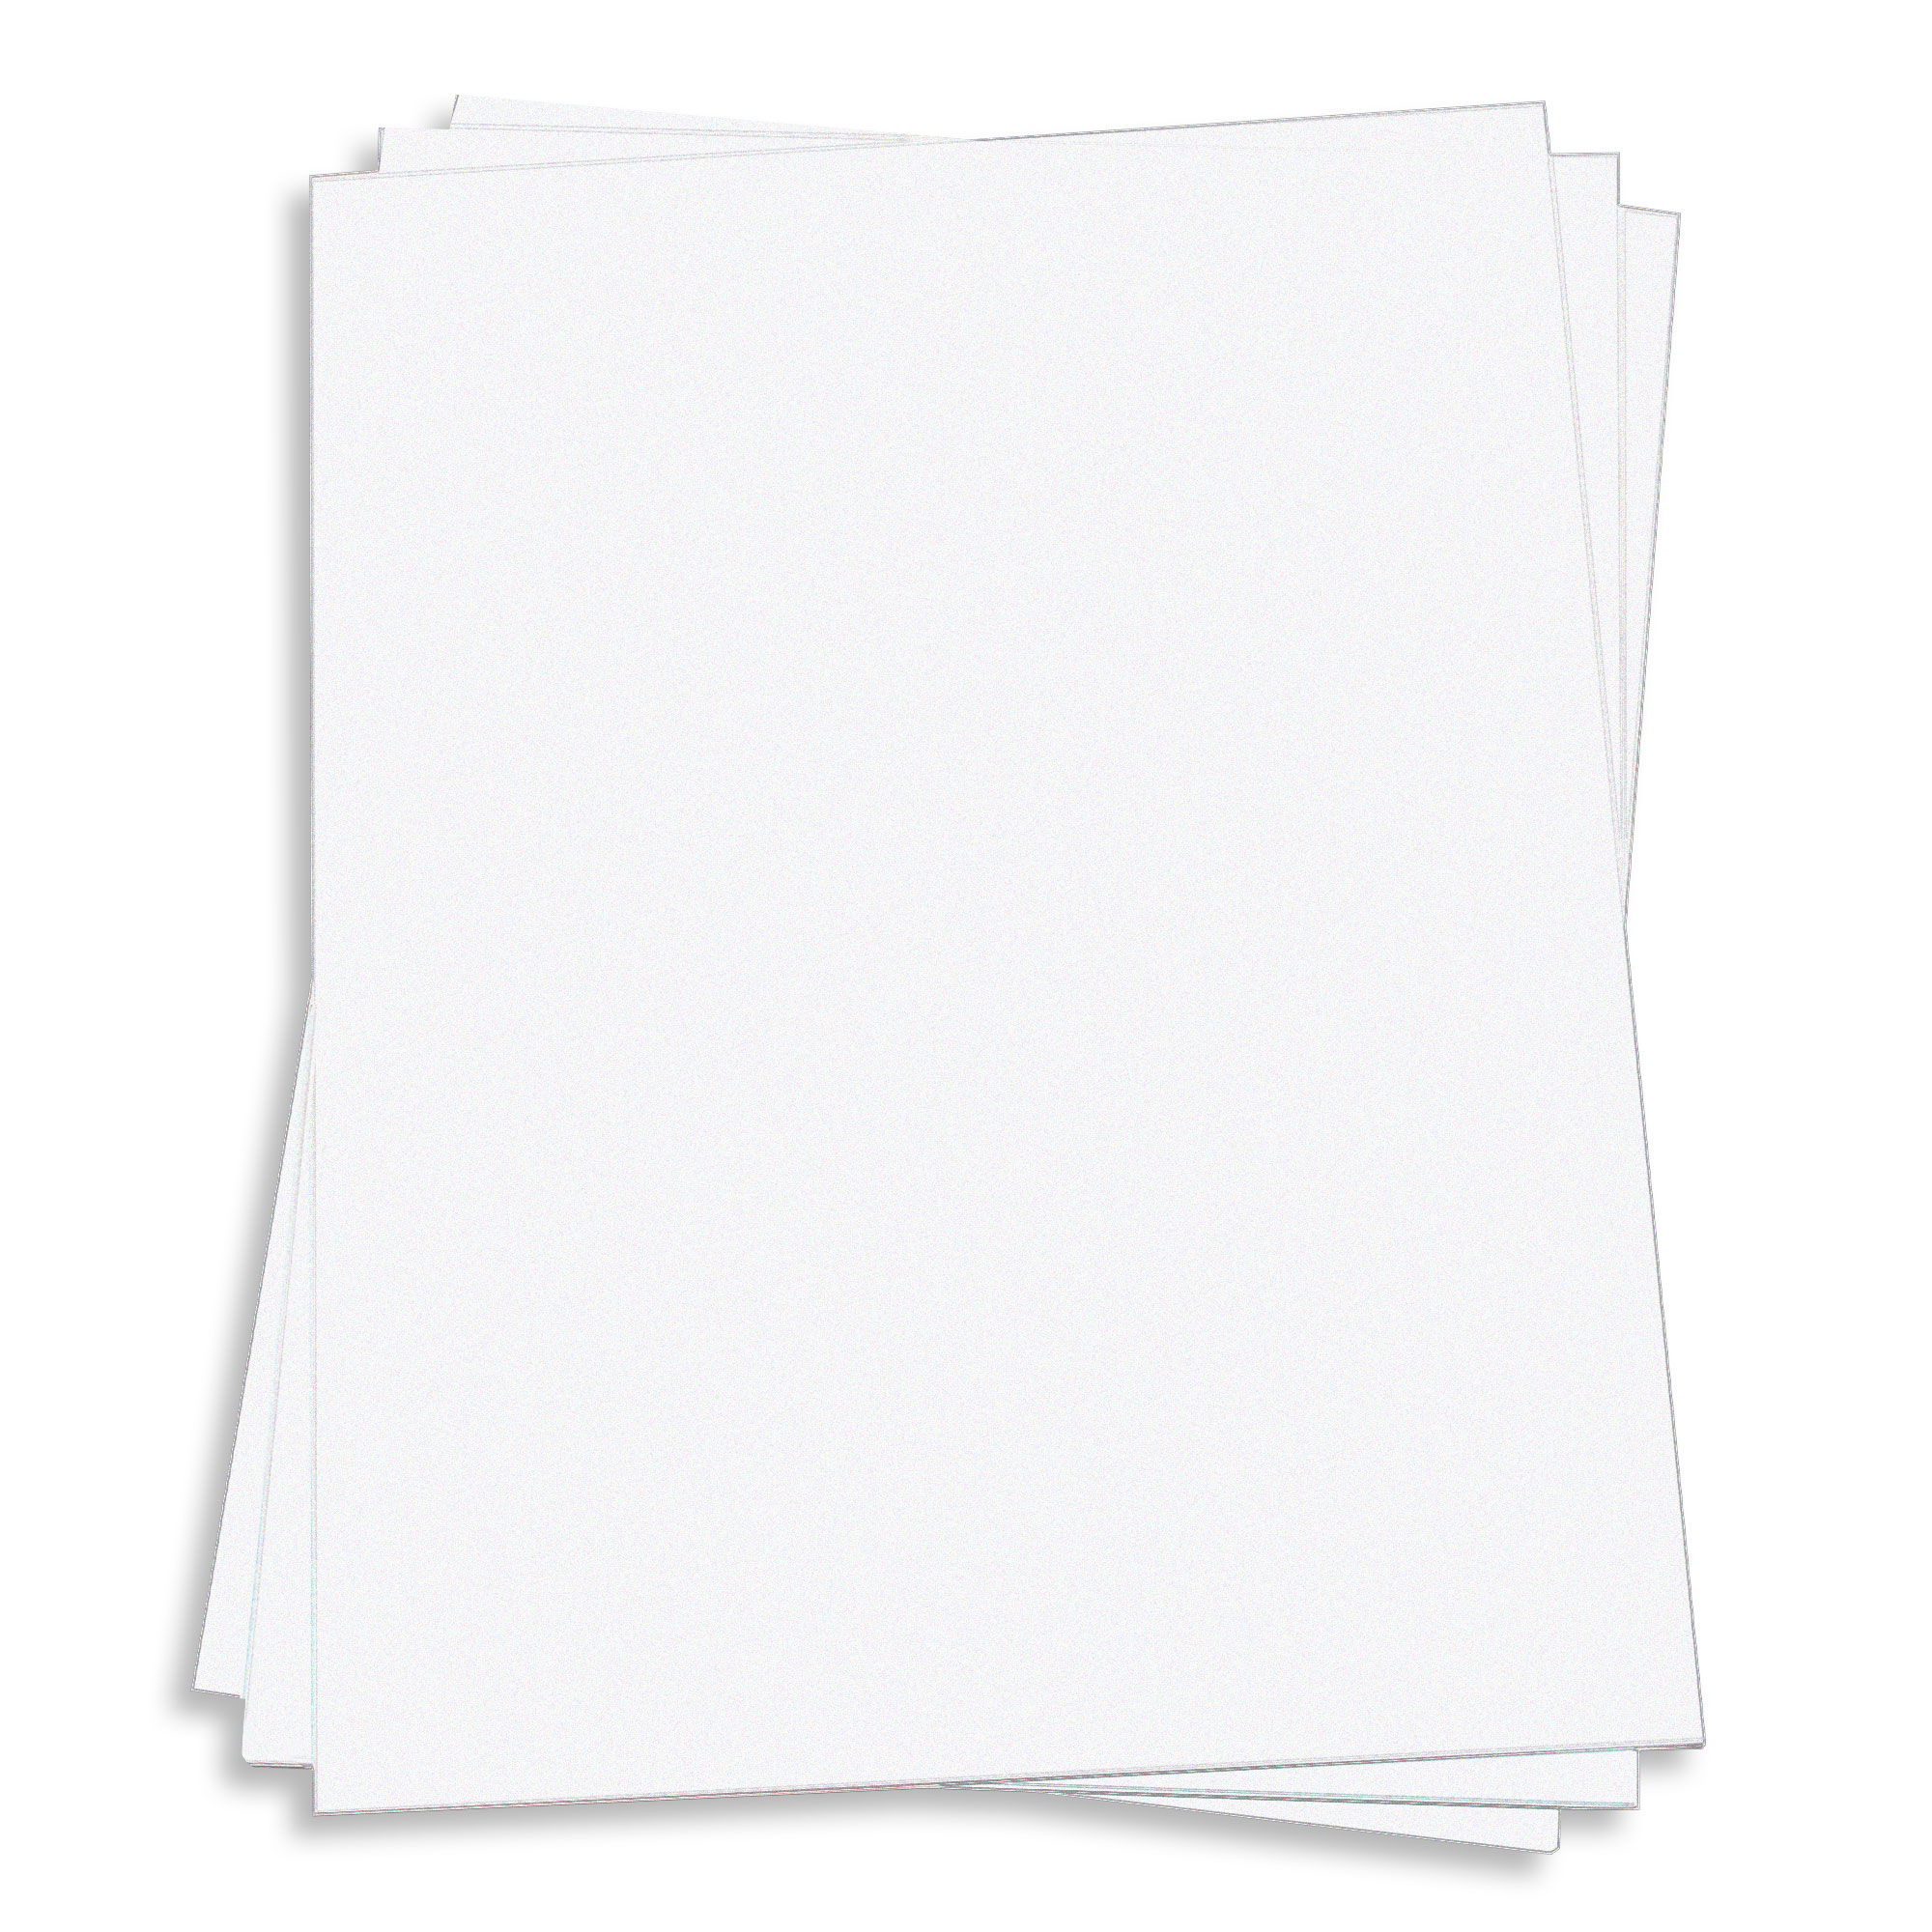 Max White Paper - 8 1/2 x 14 Gmund Cotton 74lb Text